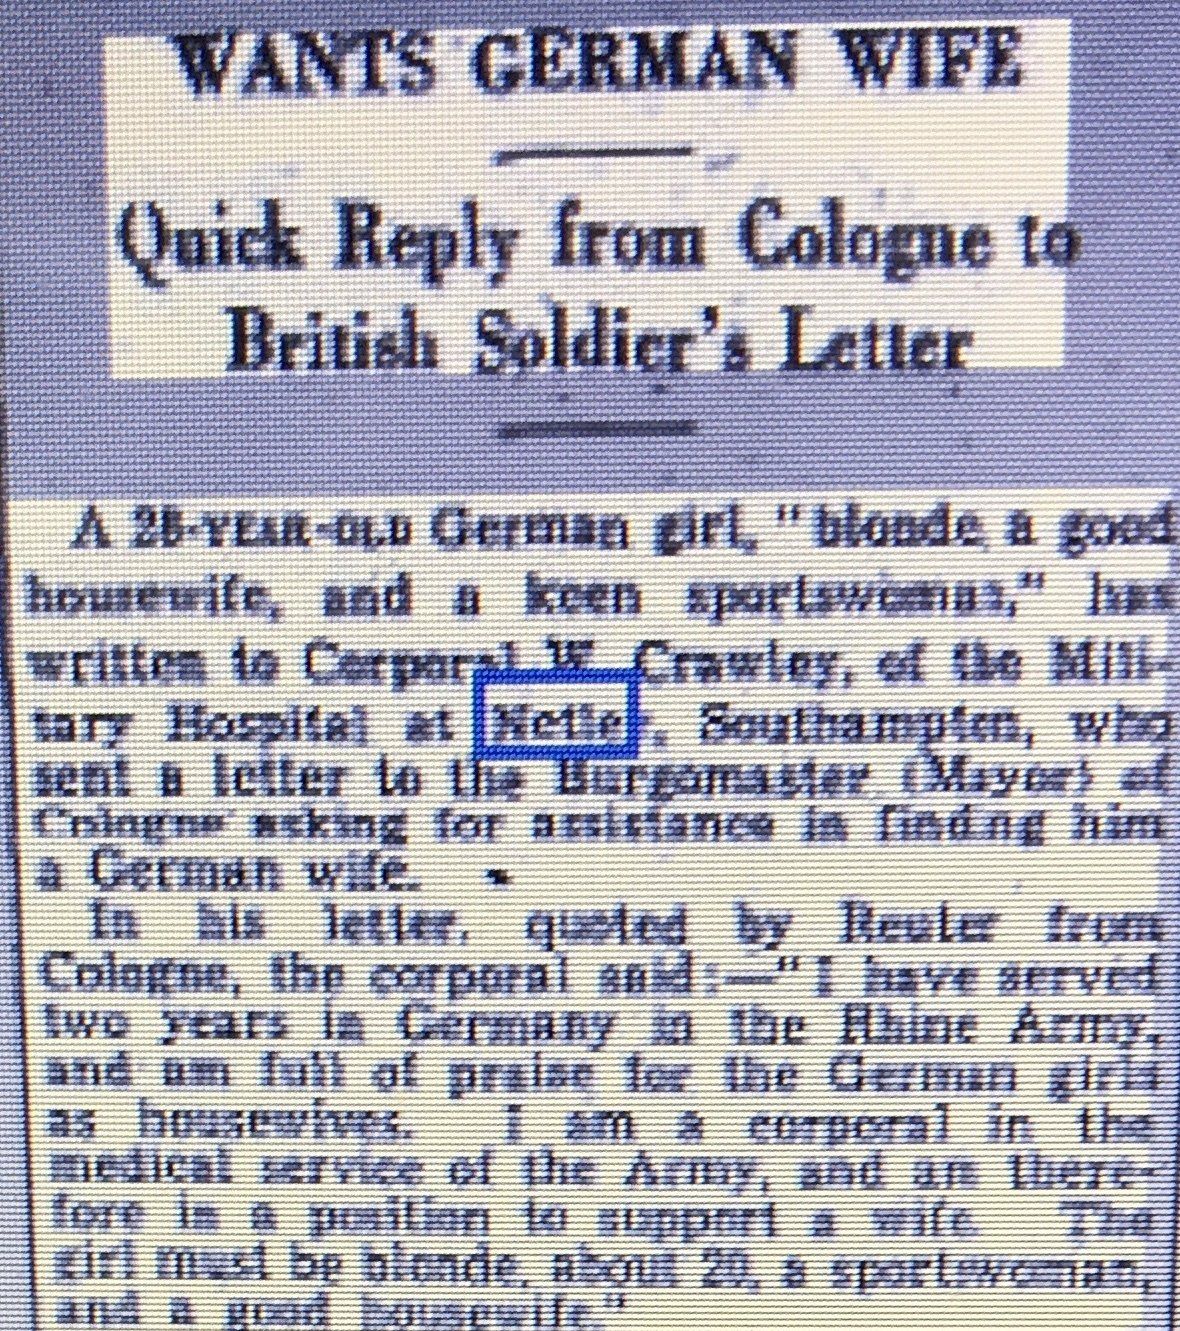 Netley Soldier looking for German wife